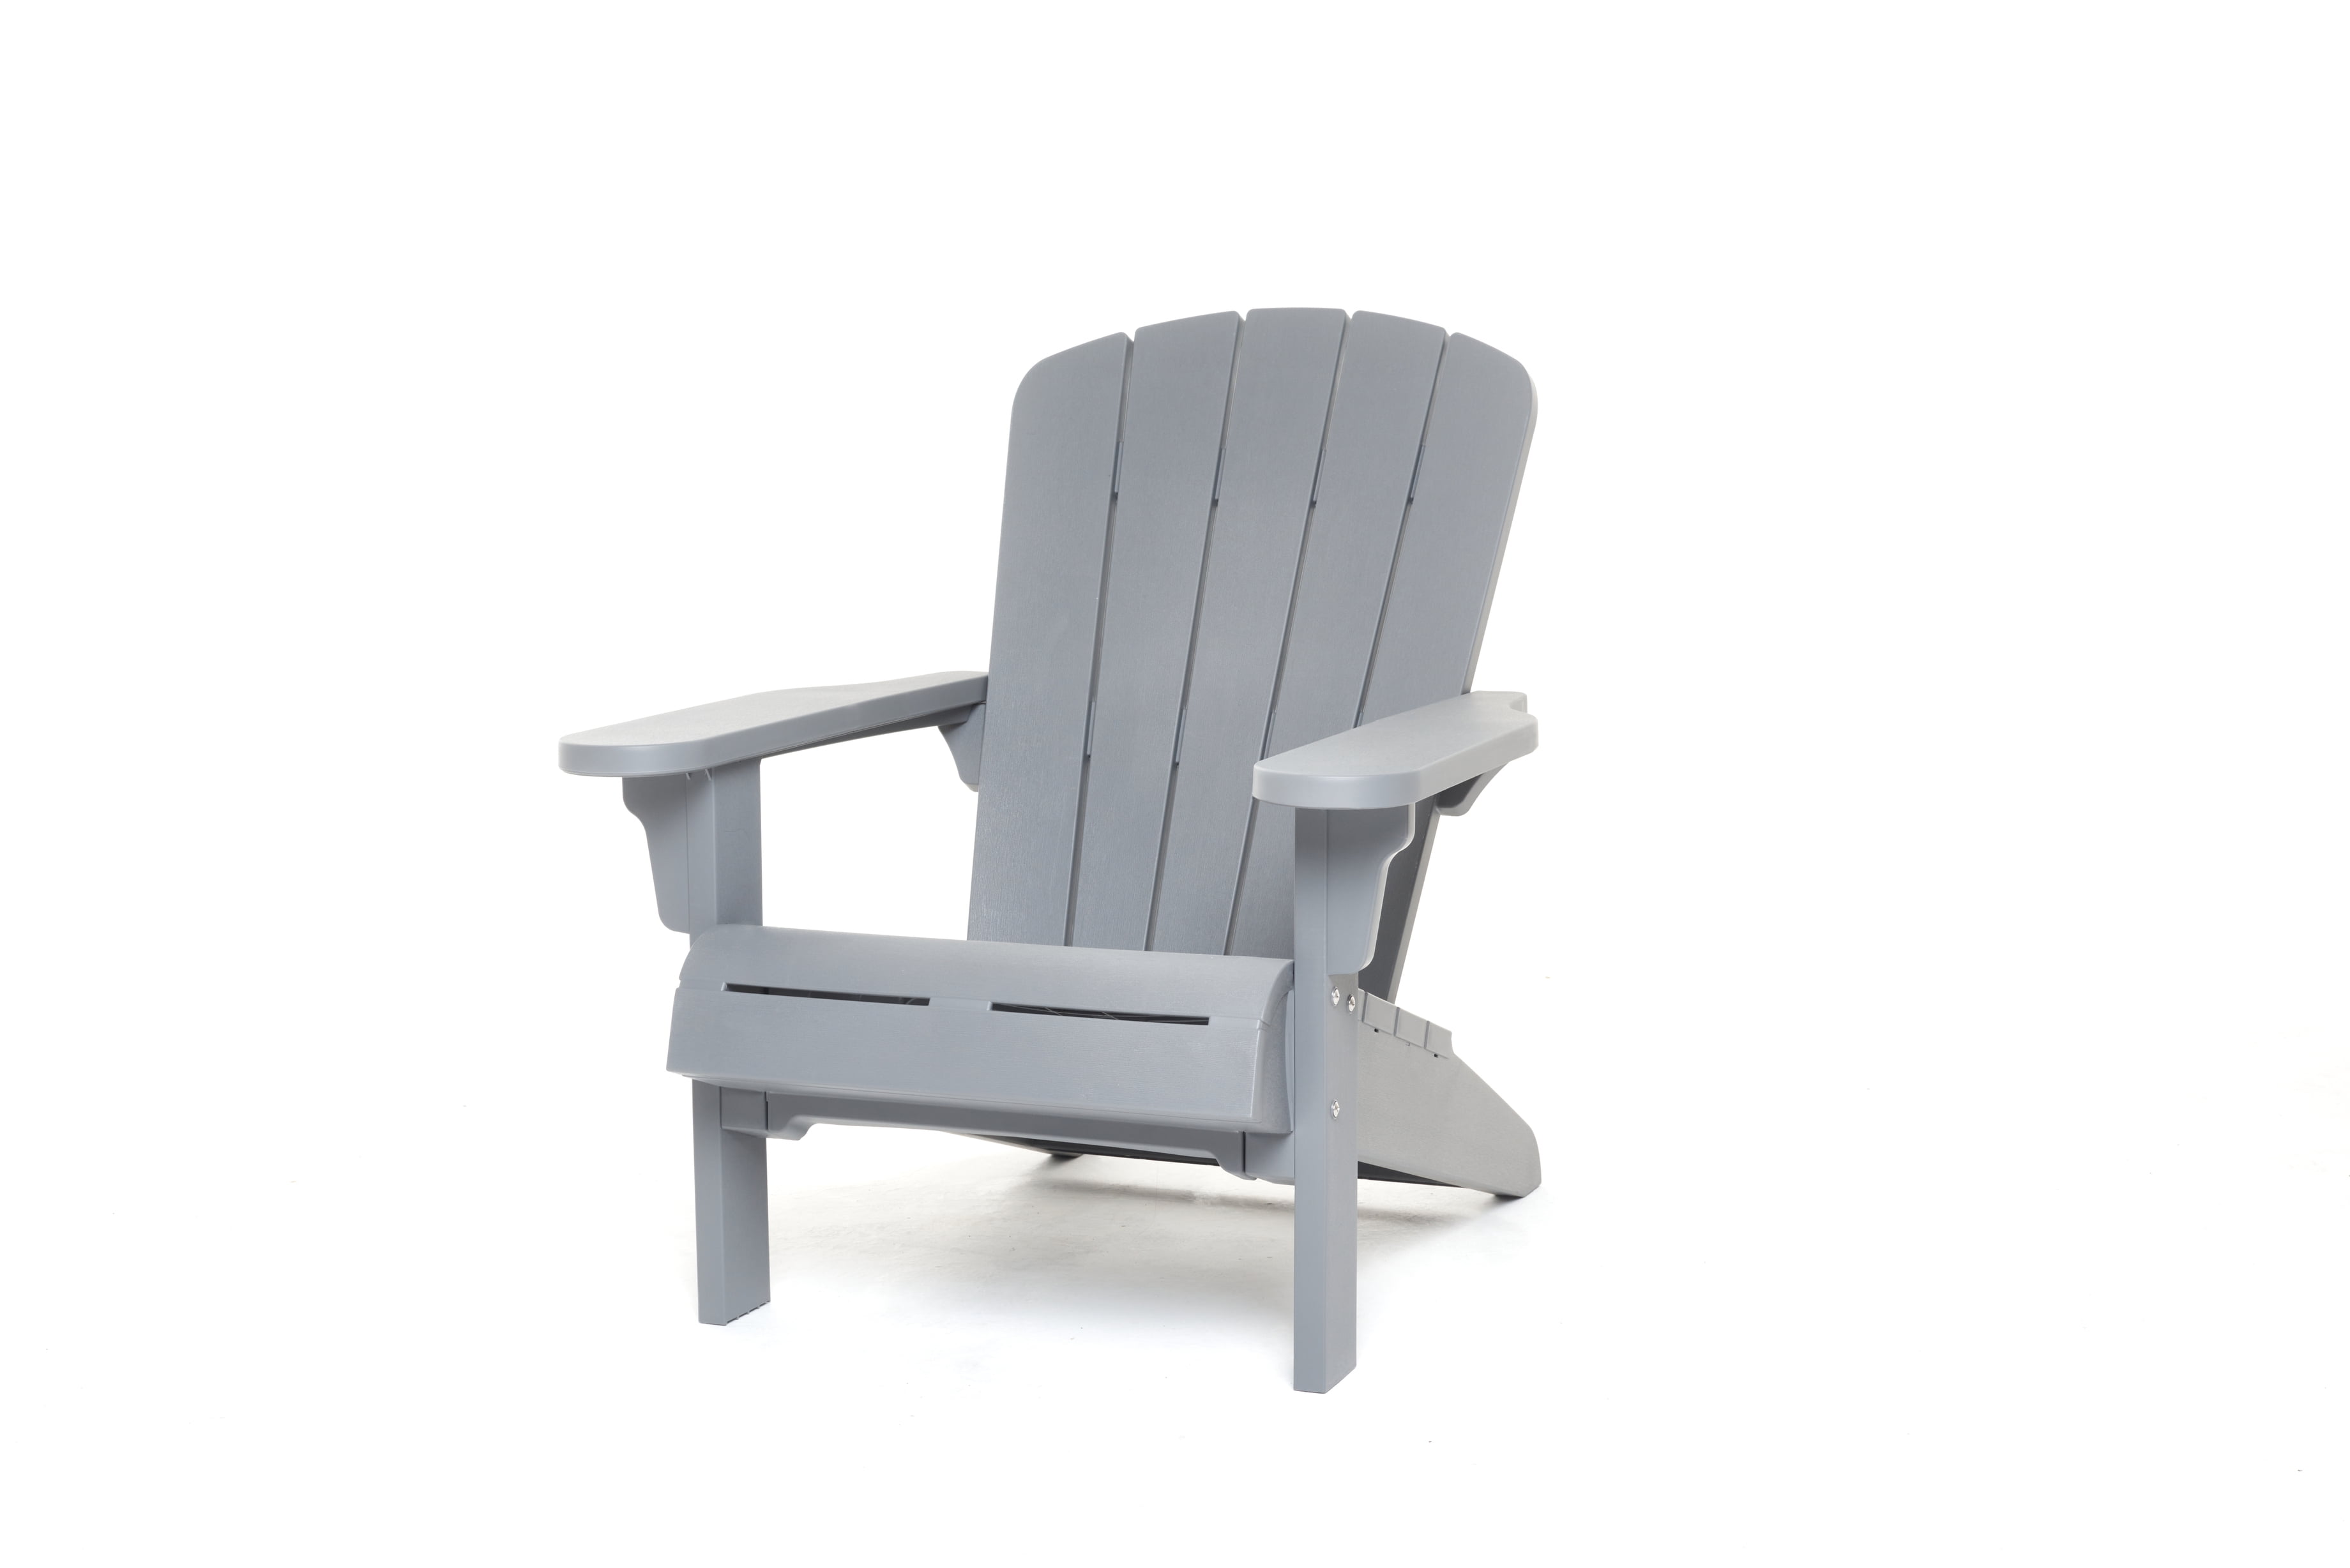 Keter Adirondack Chair Resin Outdoor Furniture Red Walmart Com Walmart Com